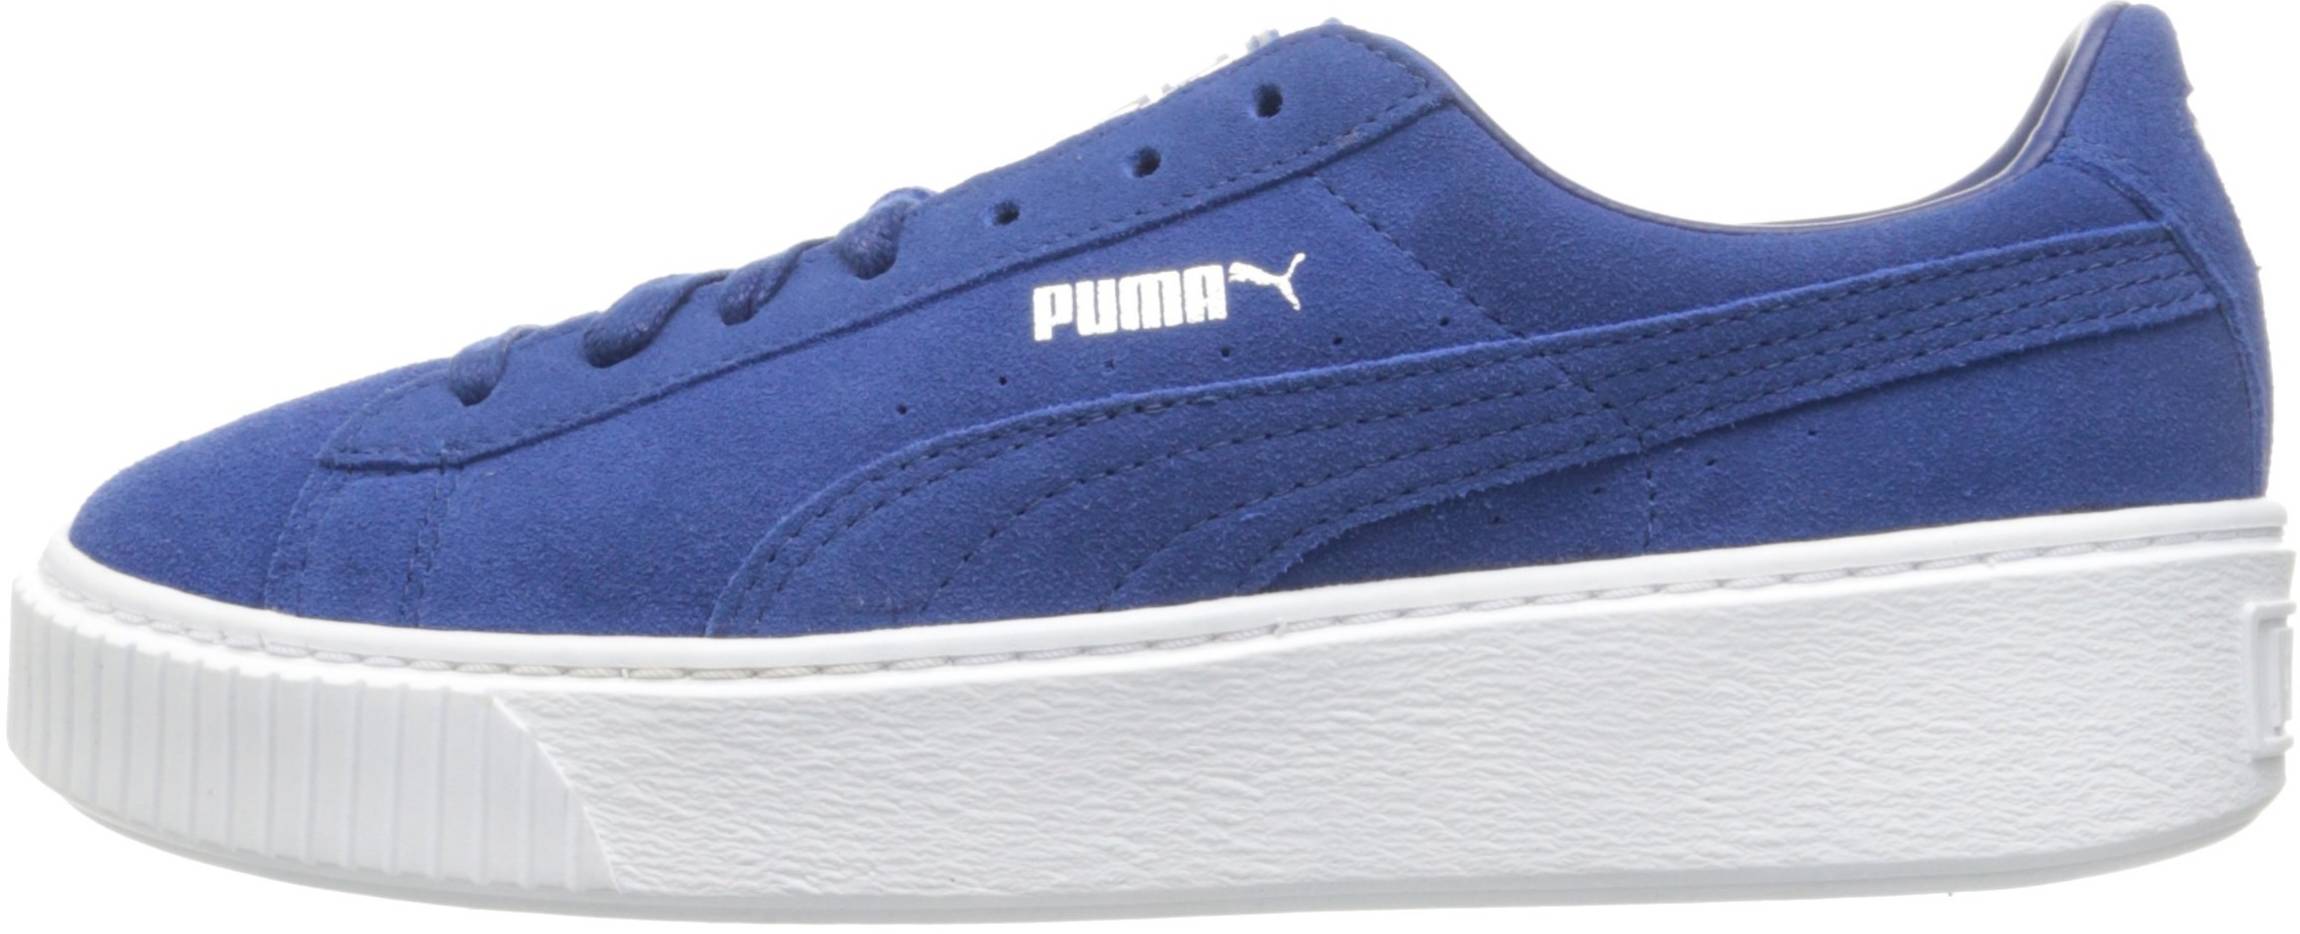 puma suede platform sneakers